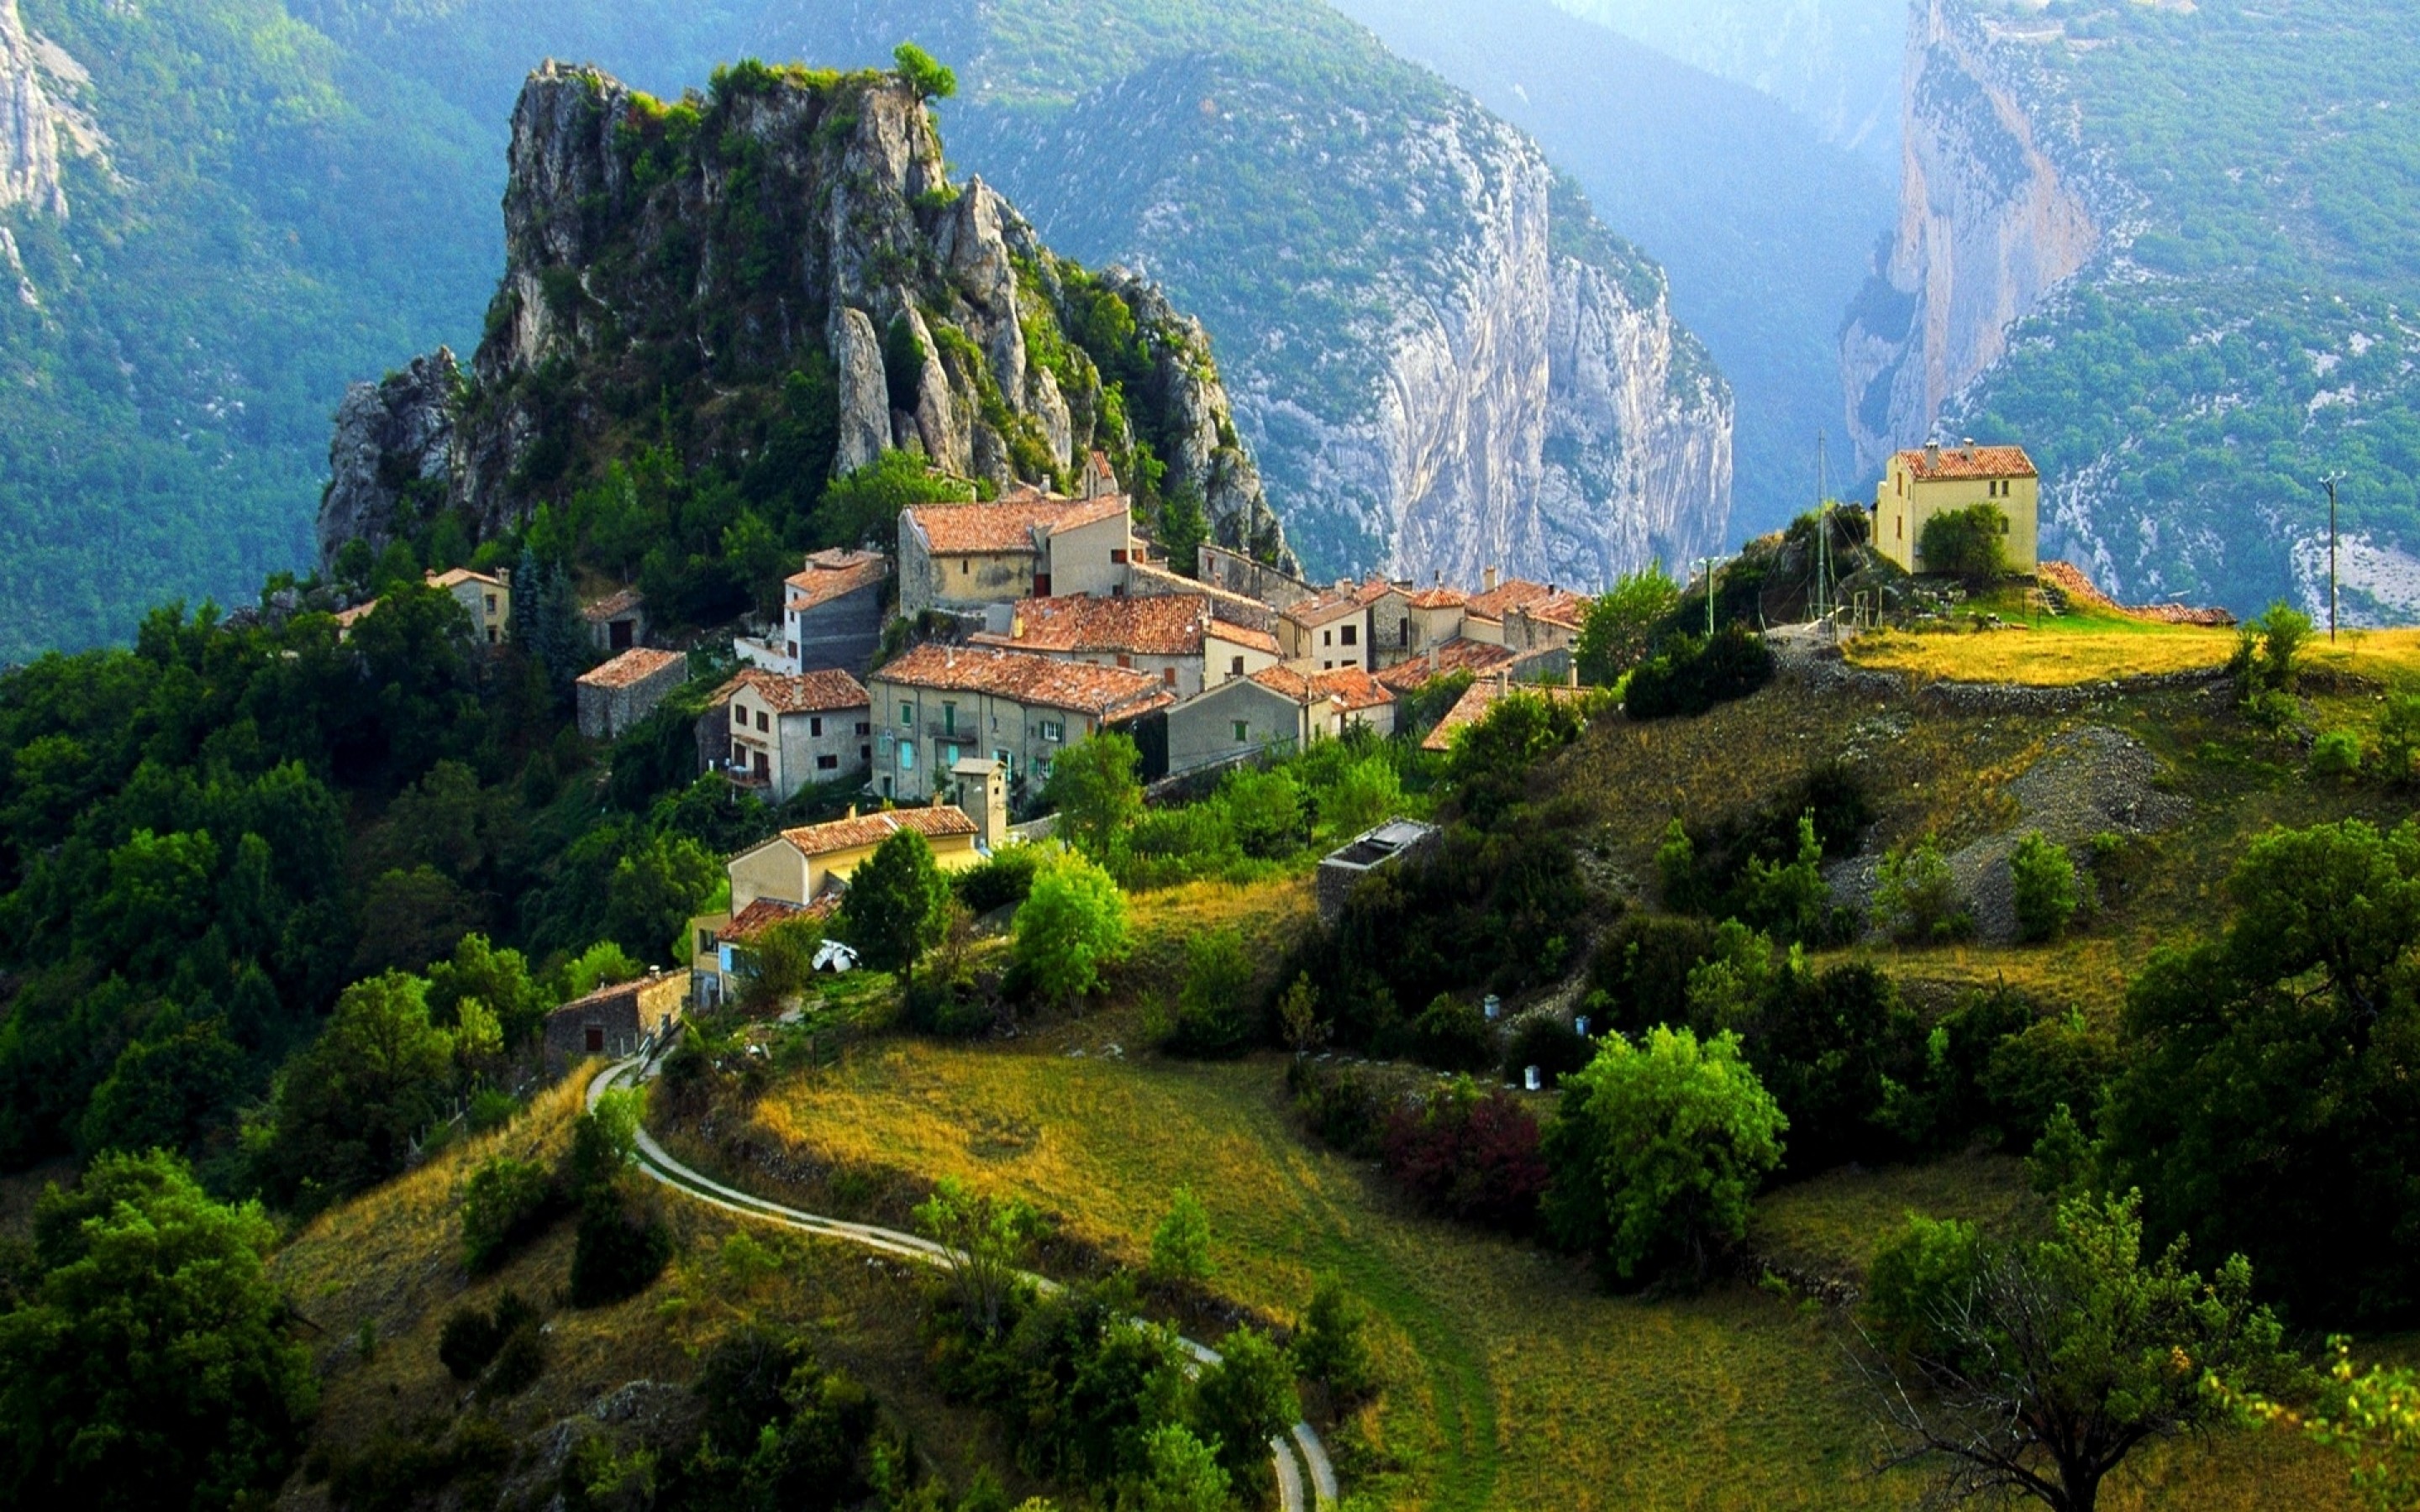 Mountain Village In The Alps, Beautiful HD Wallpaper For Desktop